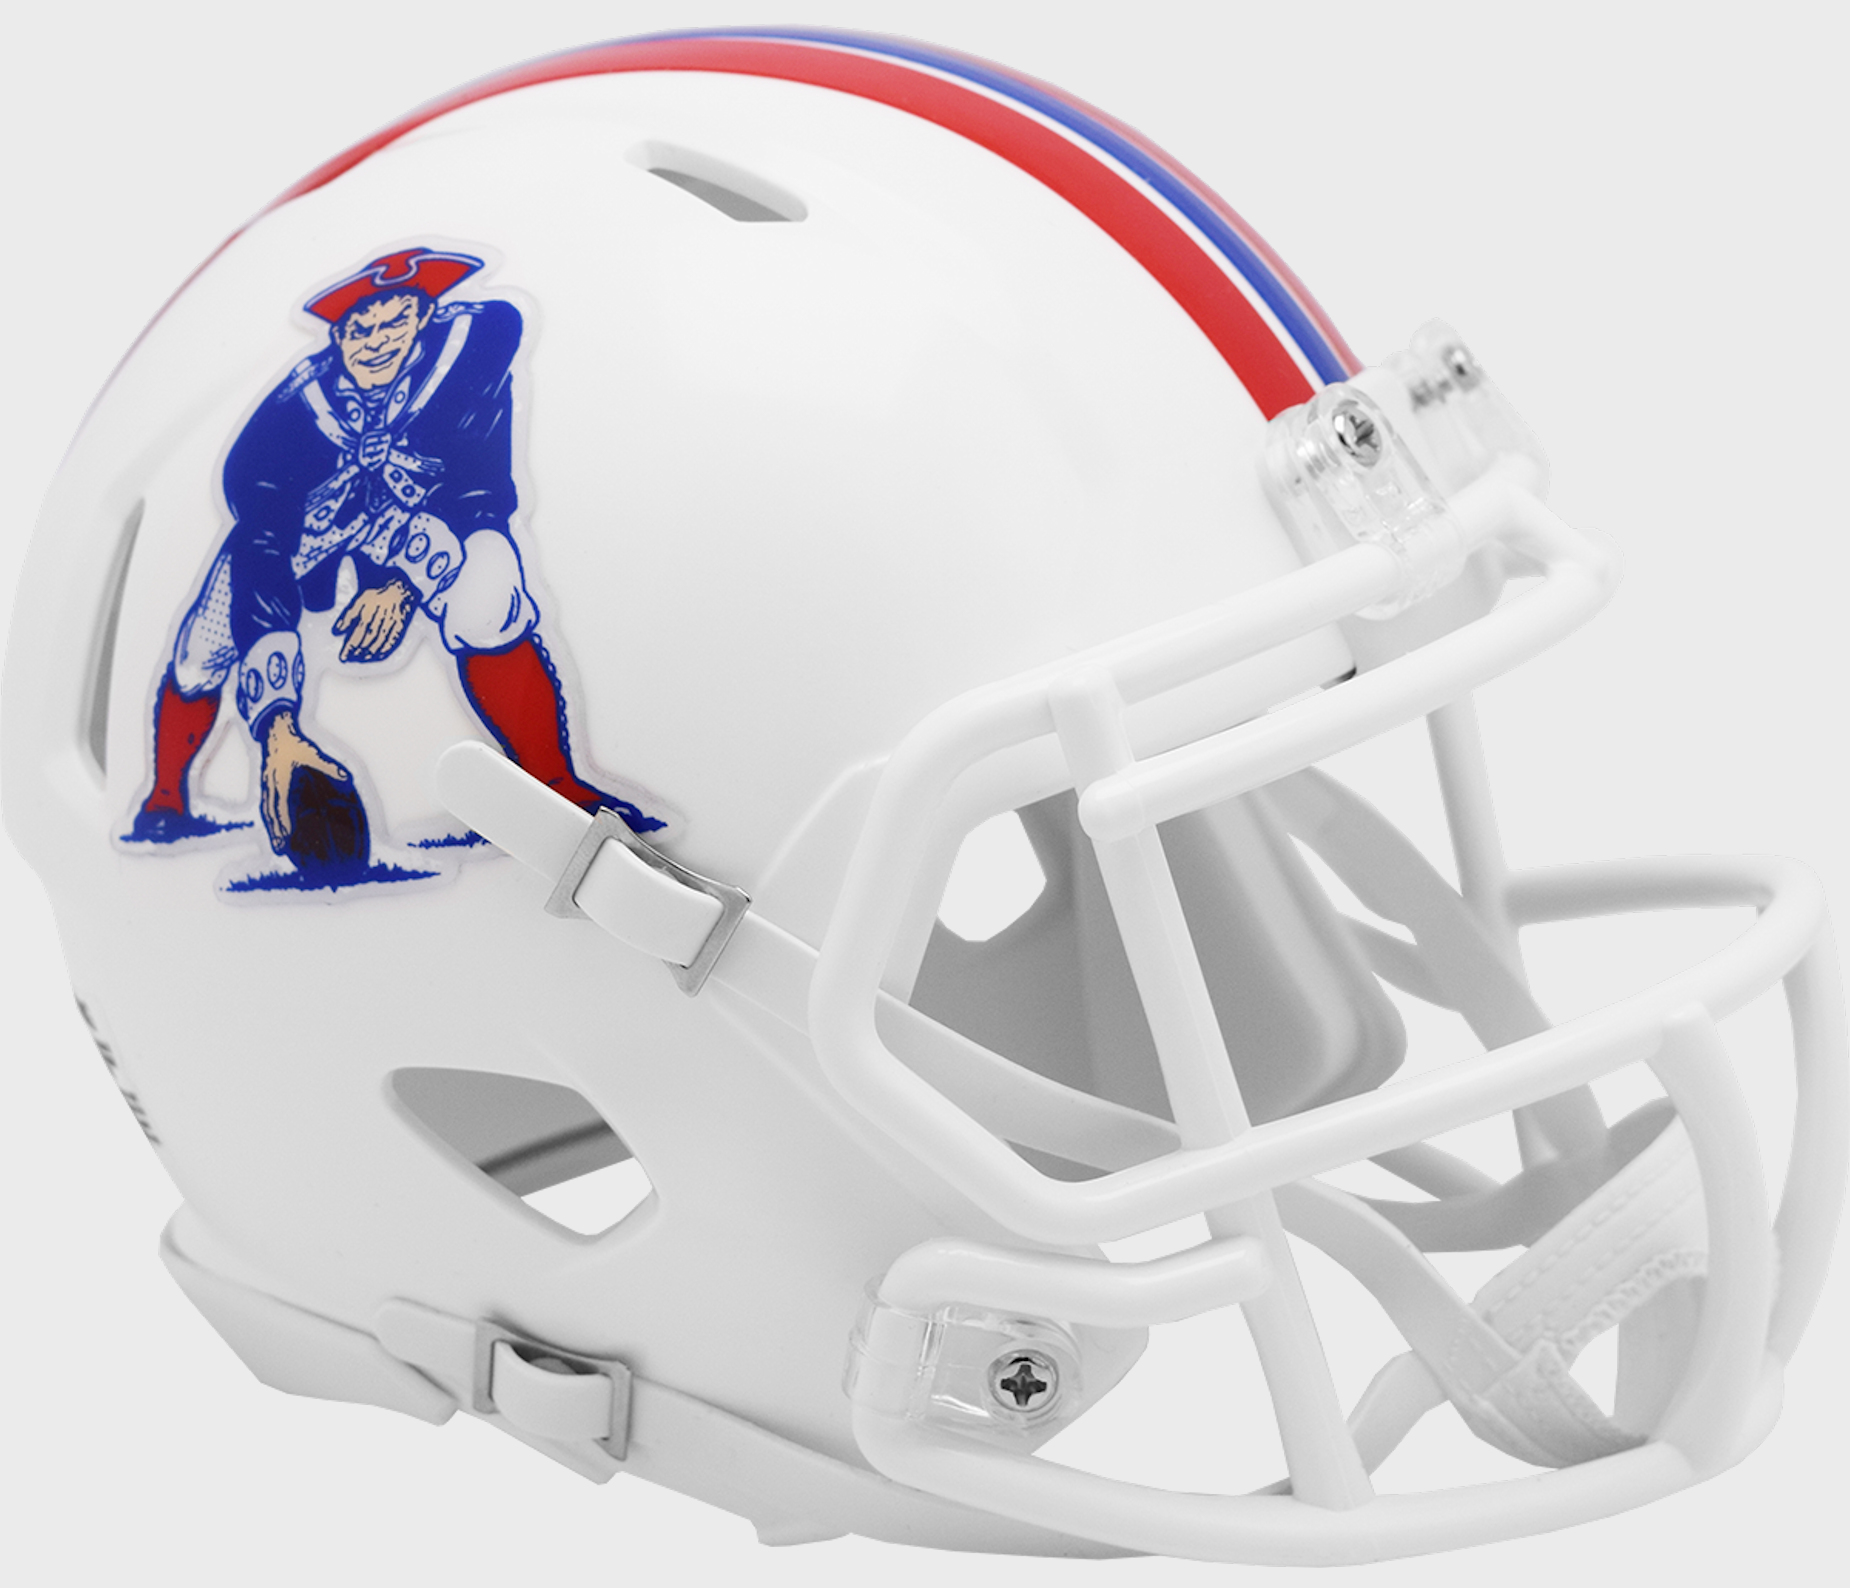 New England Patriots throwback mini helmet